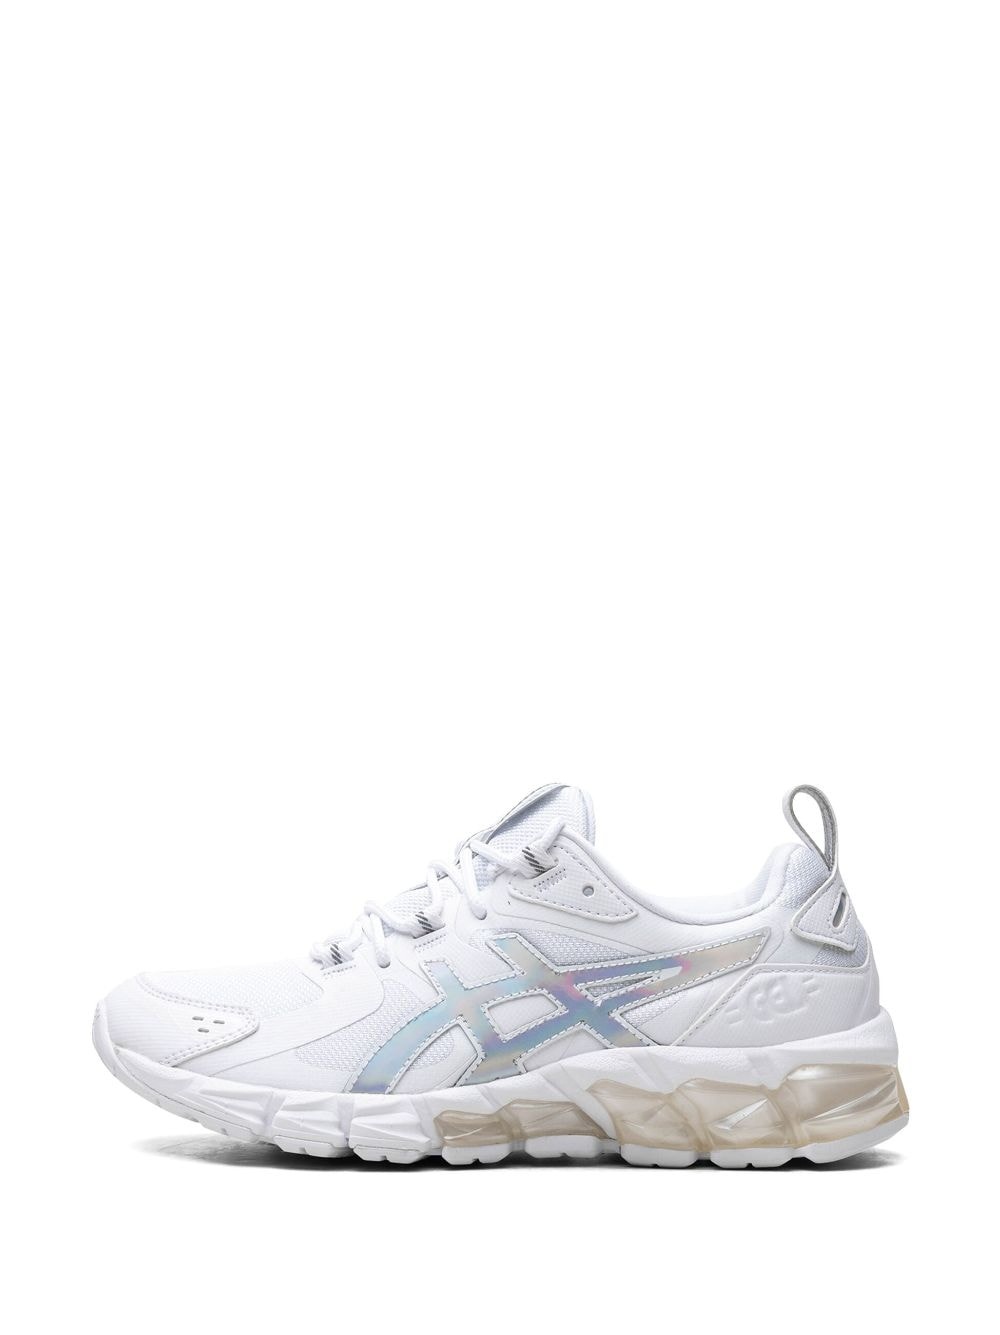 Gel Quantum 180 "Metallic/White" sneakers - 6